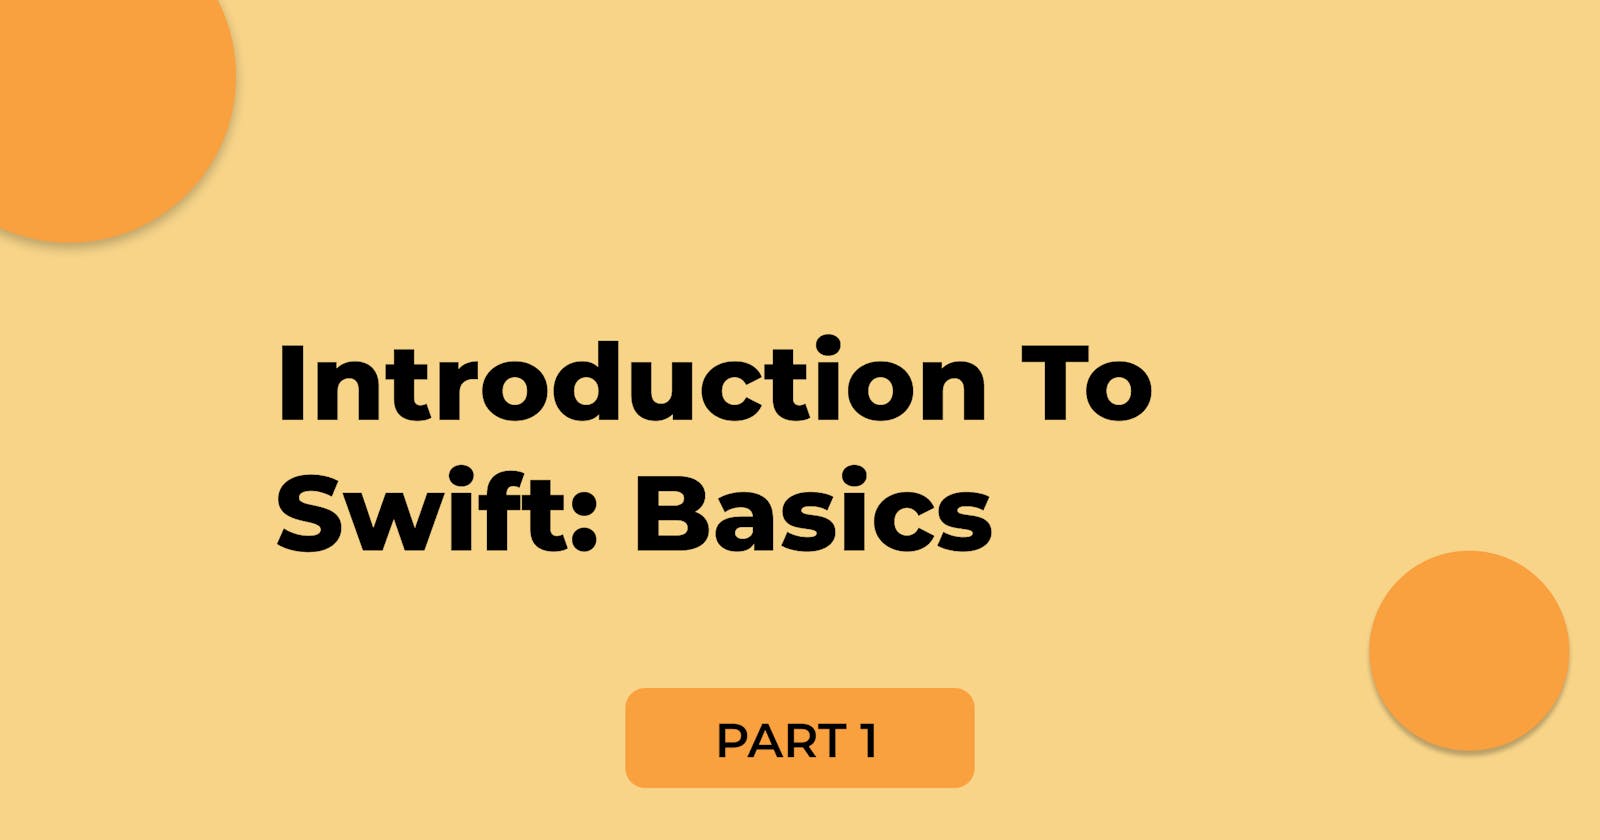 Introduction To Swift: Basics (Part 1)